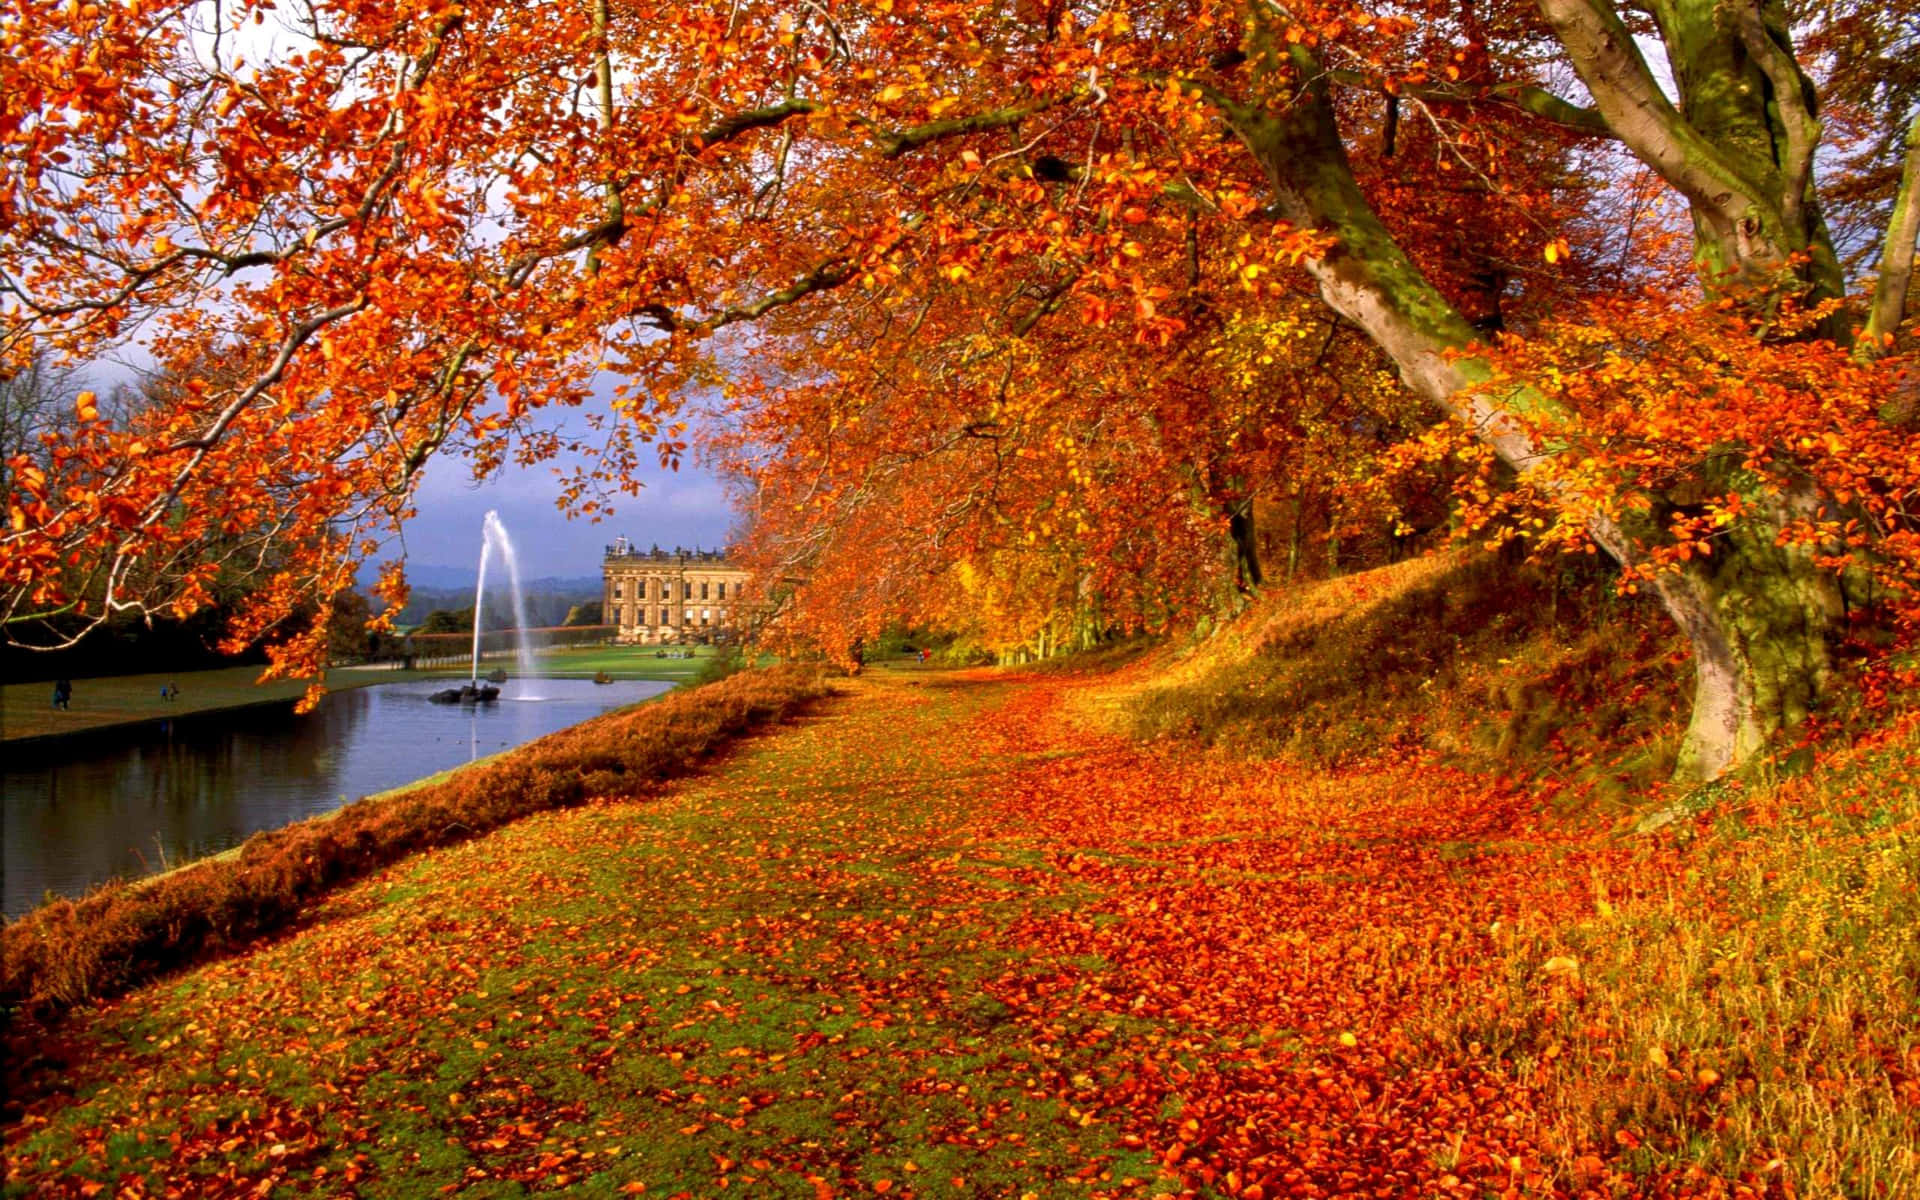 Vibrant Autumn Foliage in a Scenic Forest